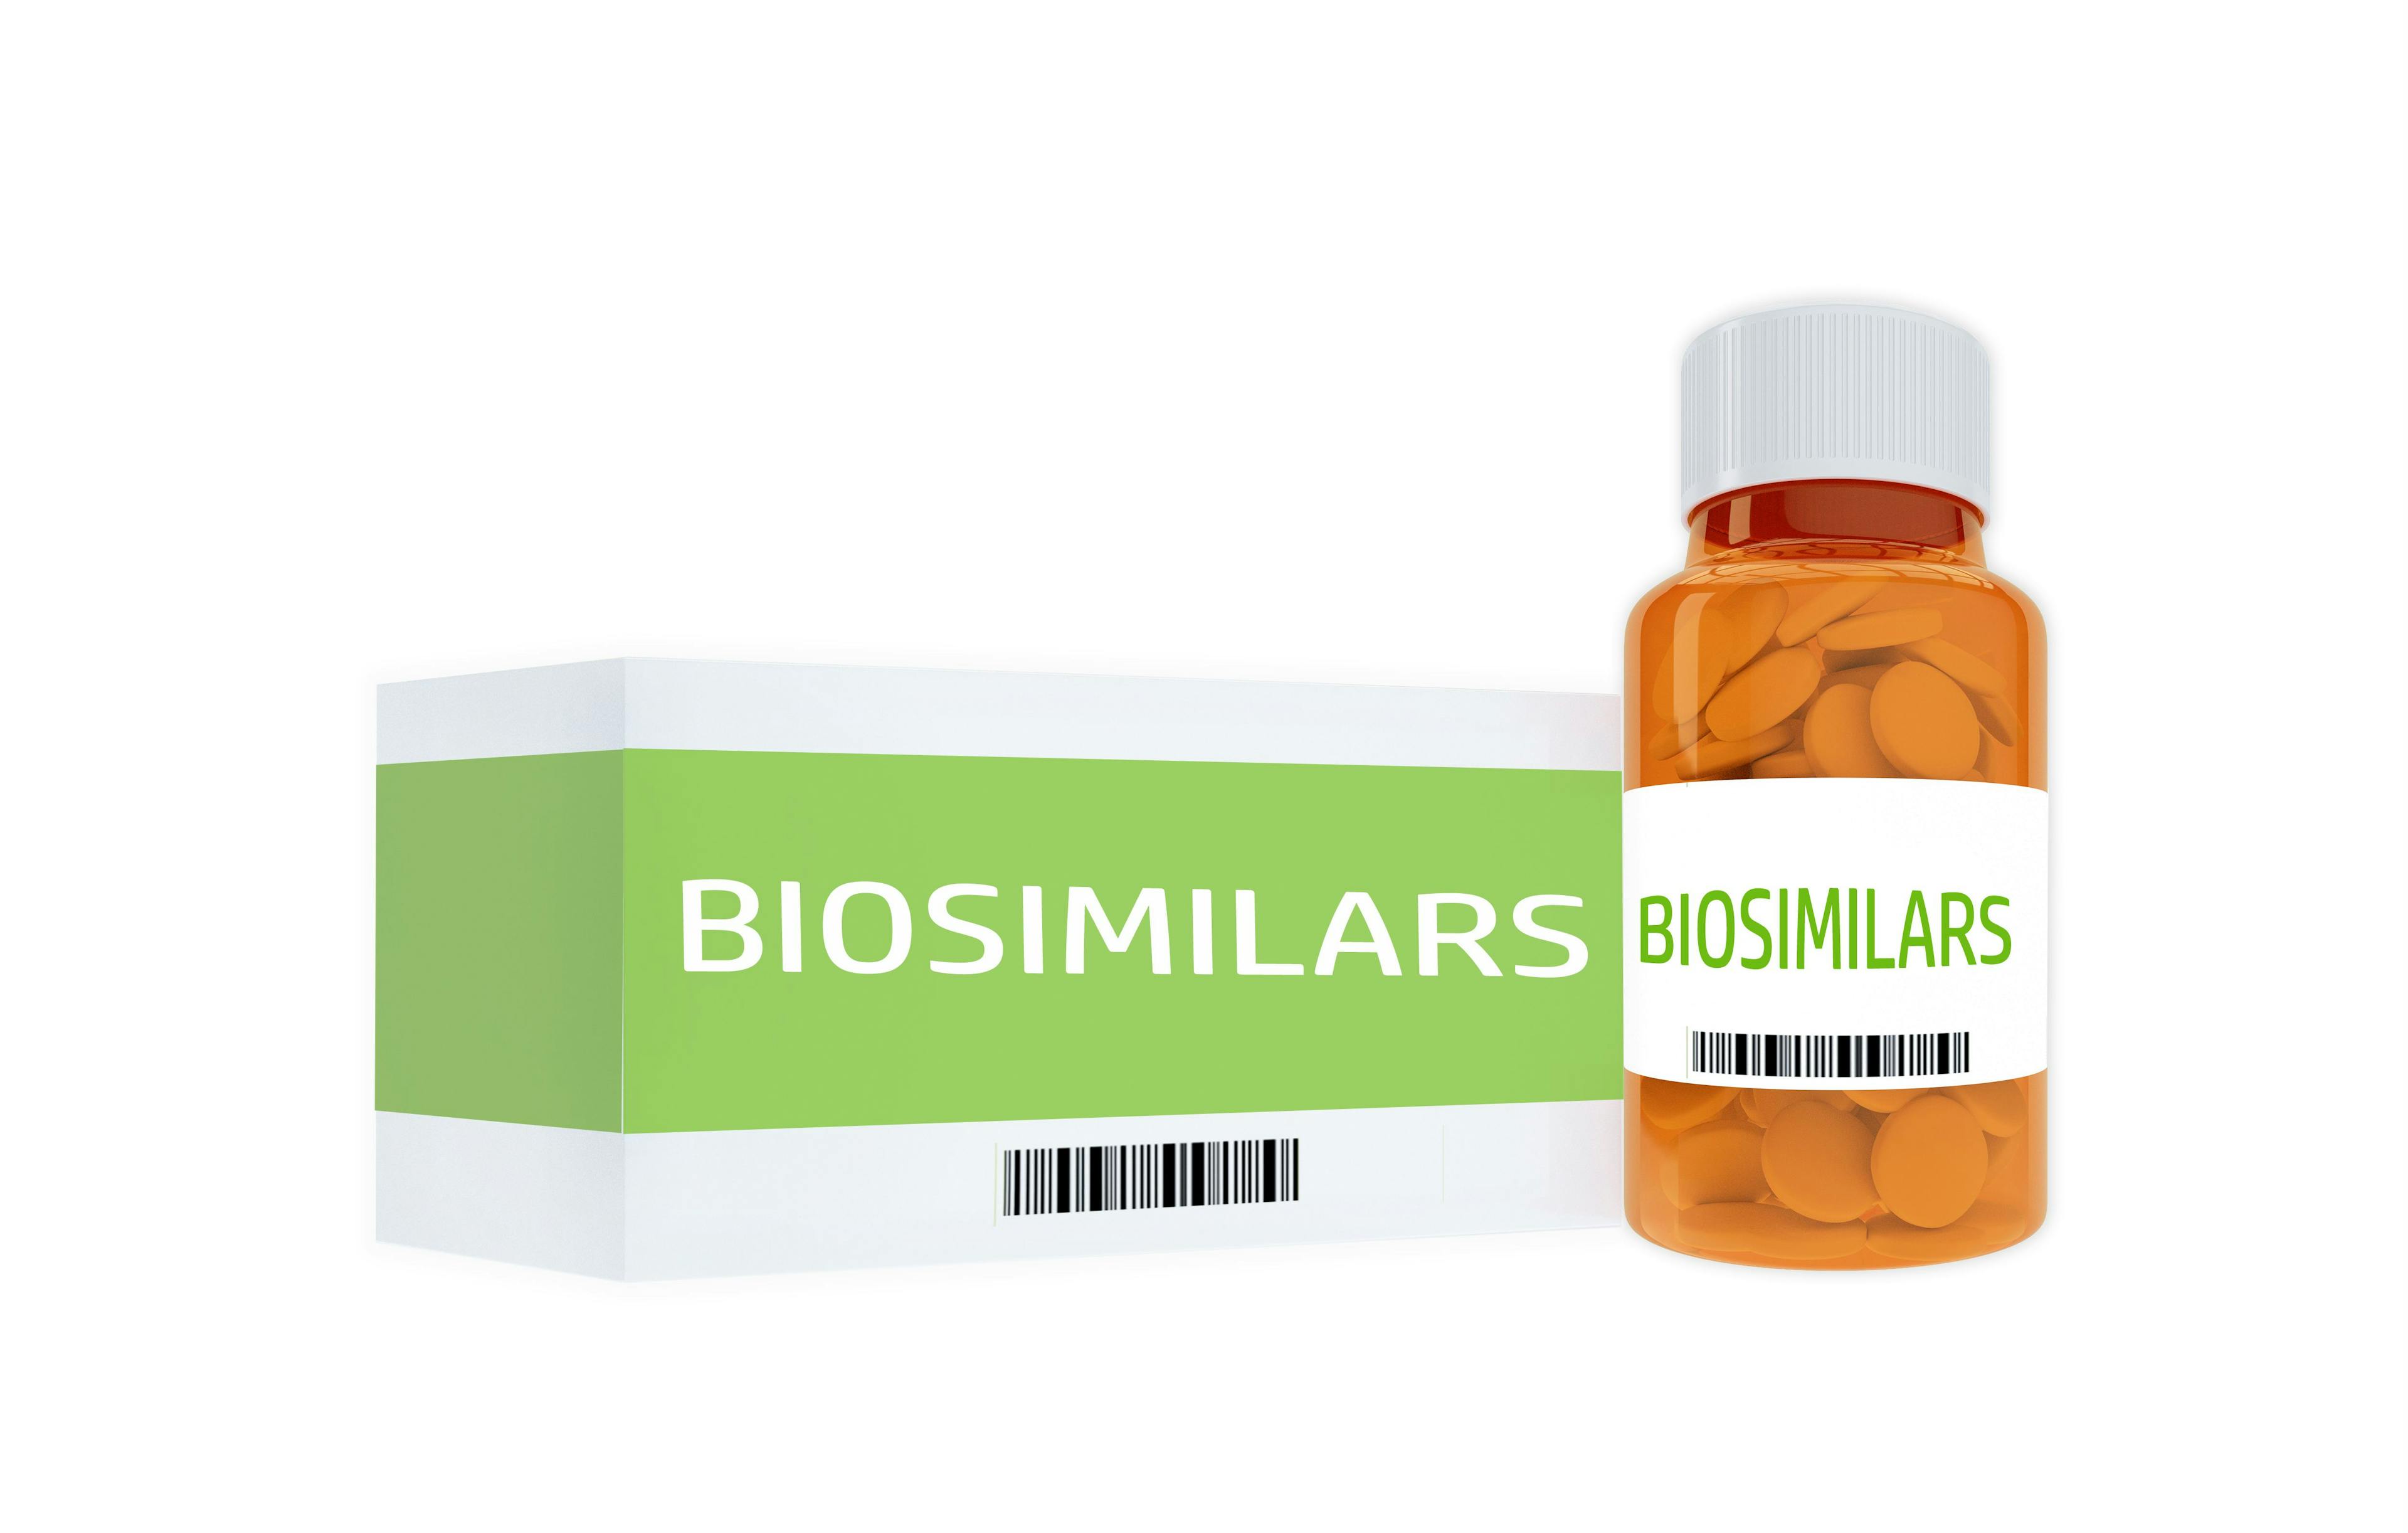 BIOSIMILARS - pharmaceutical concept